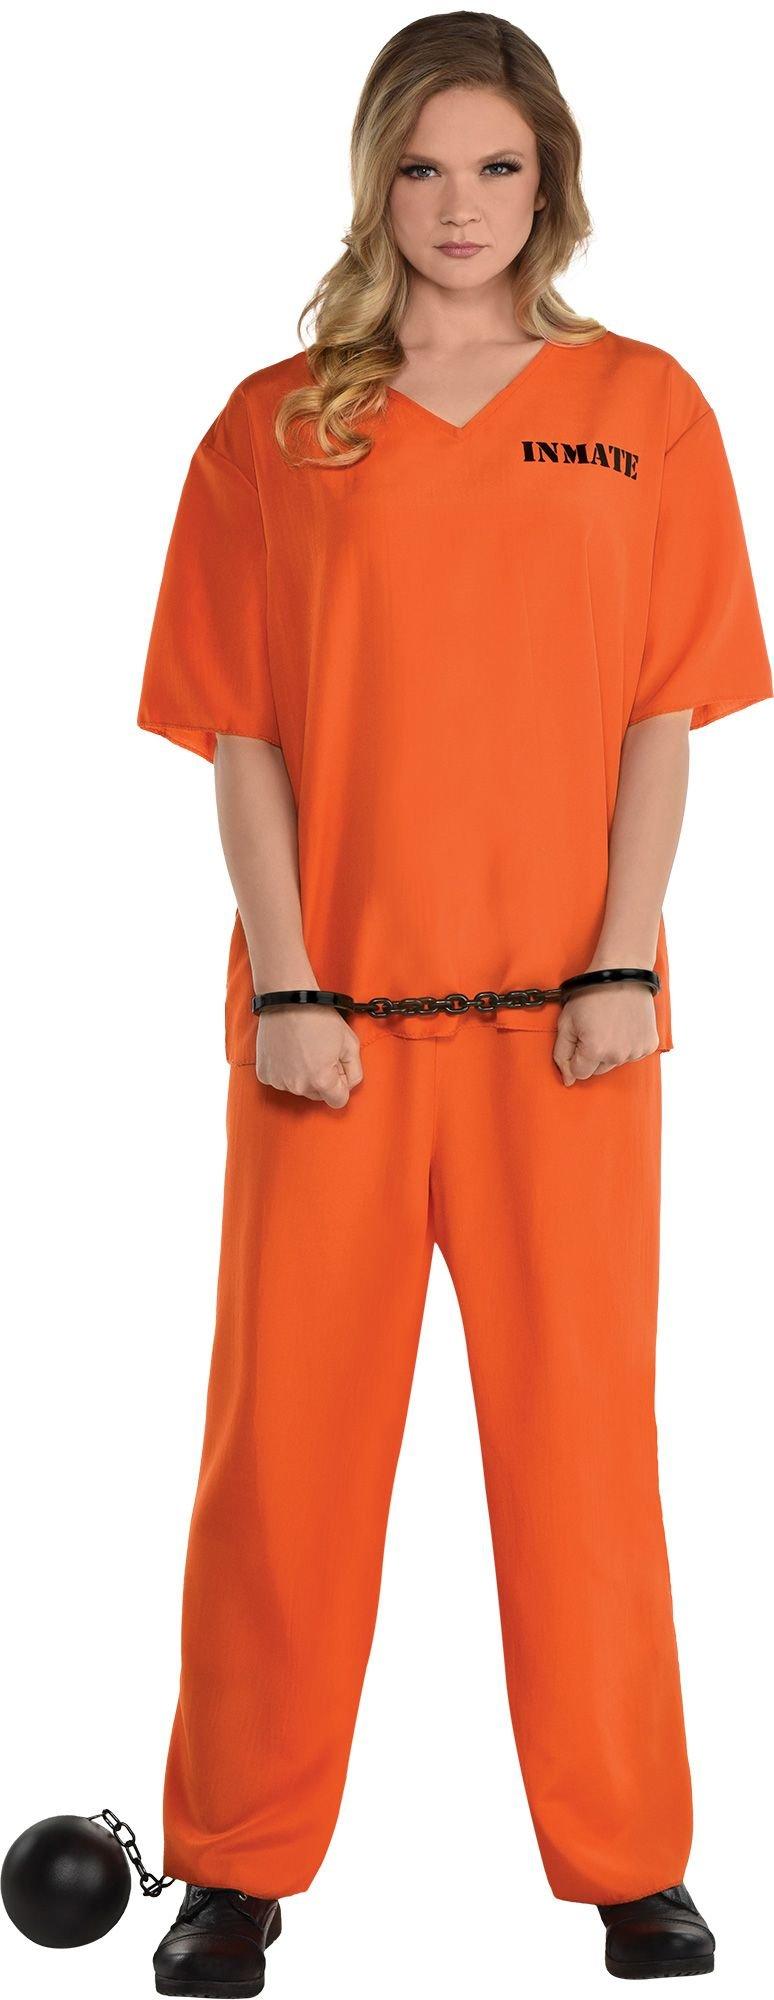 Womens Orange Prisoner Costume Party City 